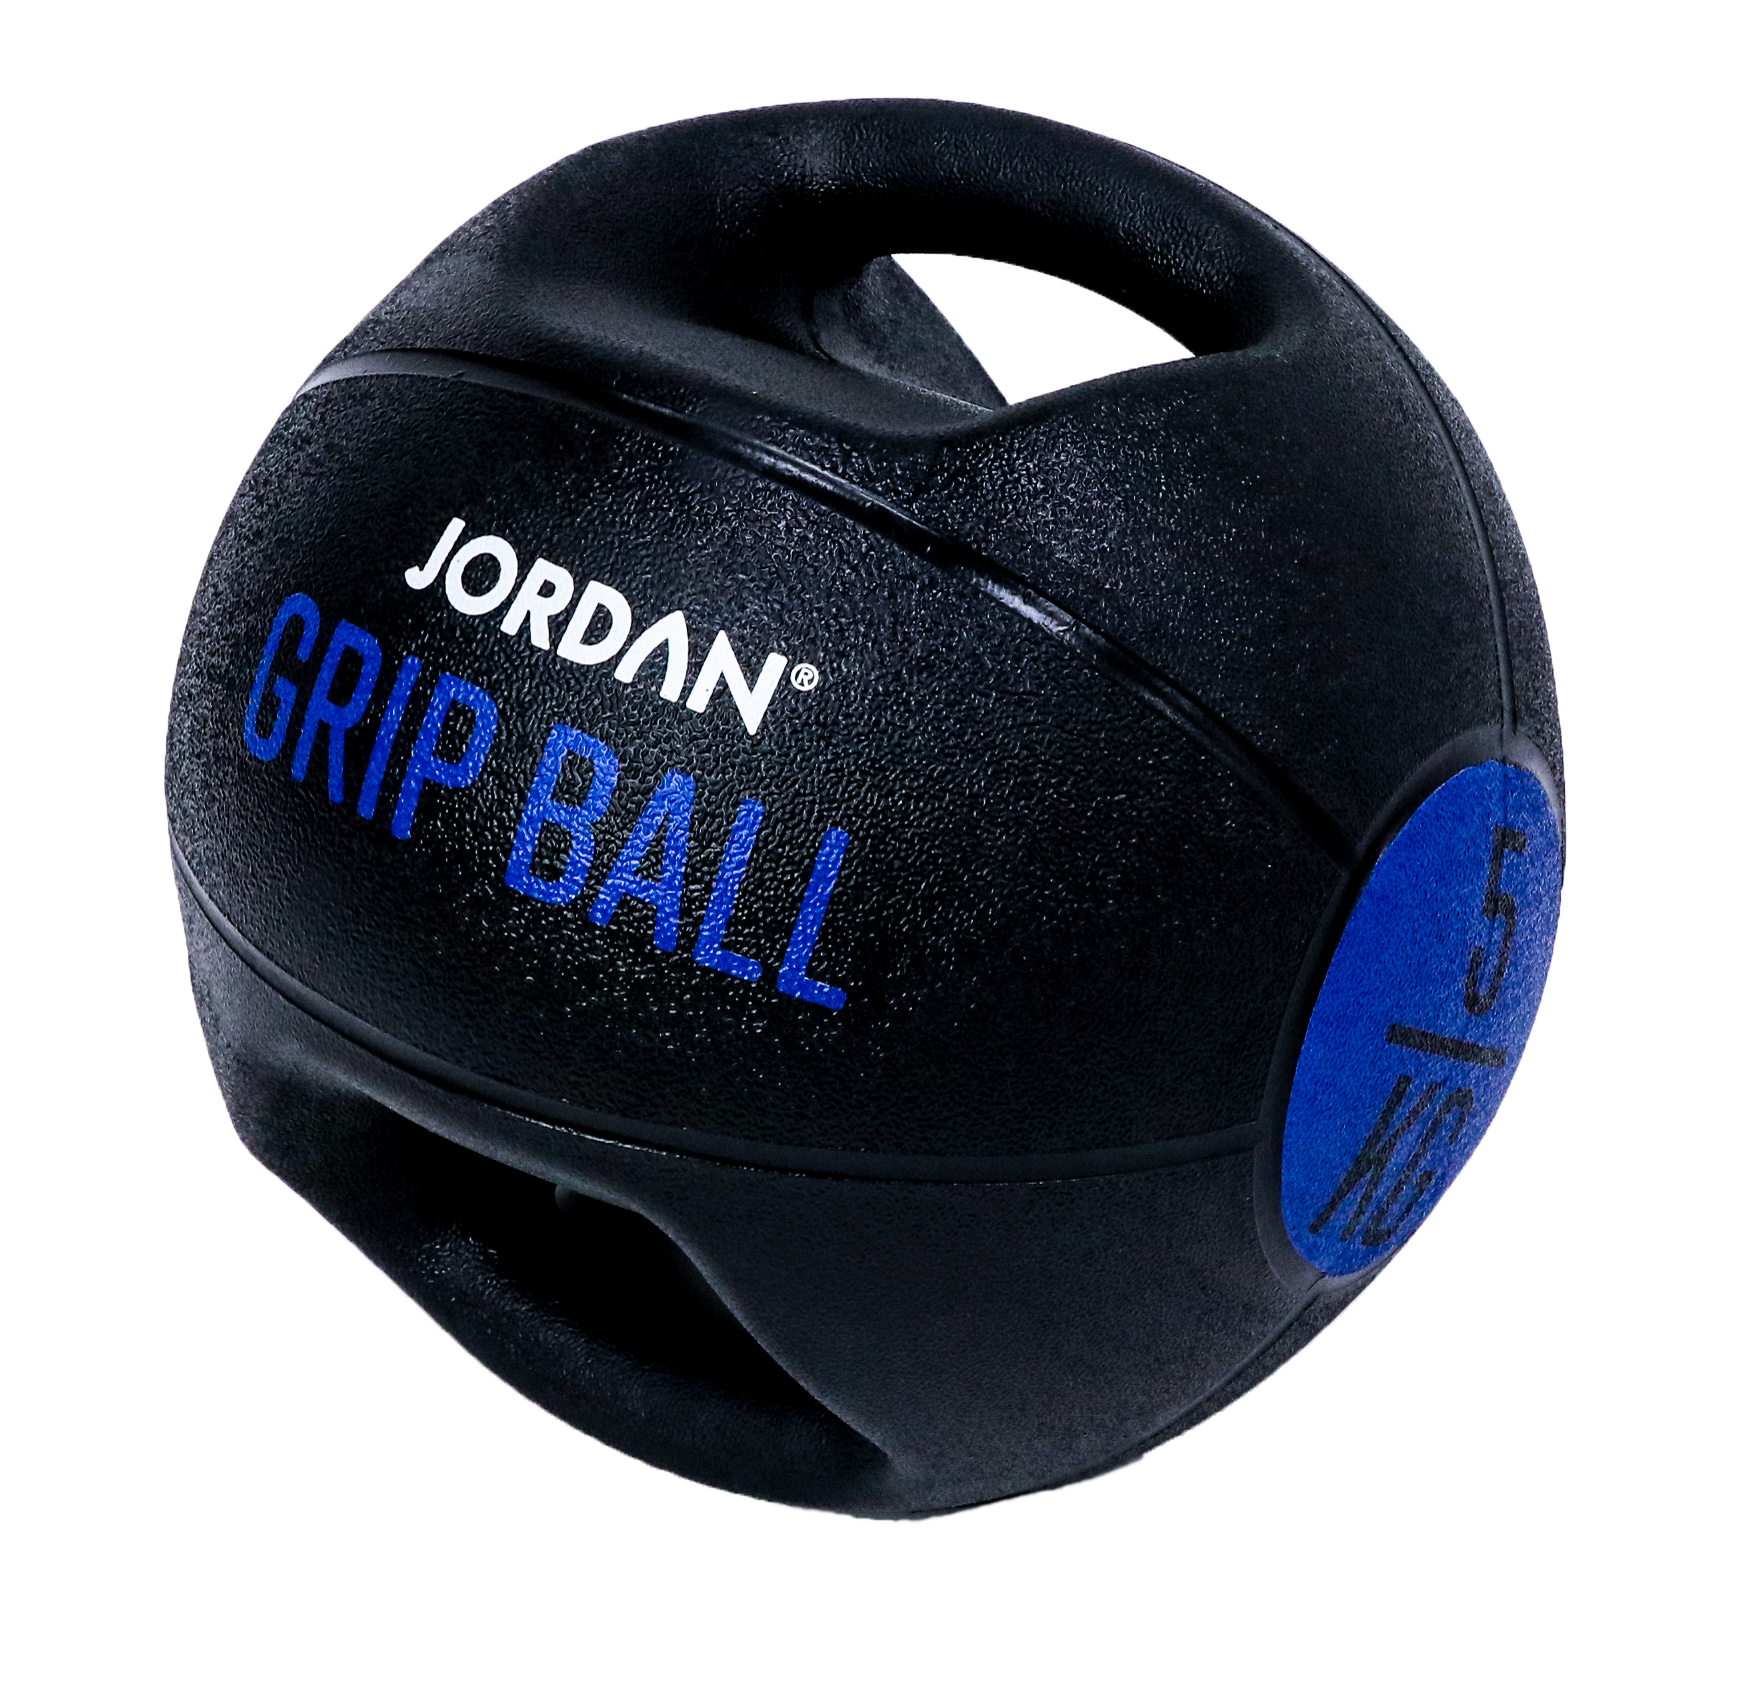 ketting wonder Door 5Kg Double grip medicine ball - Blue kopen? Ga voor kwaliteit | AStepAhead  - Grip Balls - AStepAhead